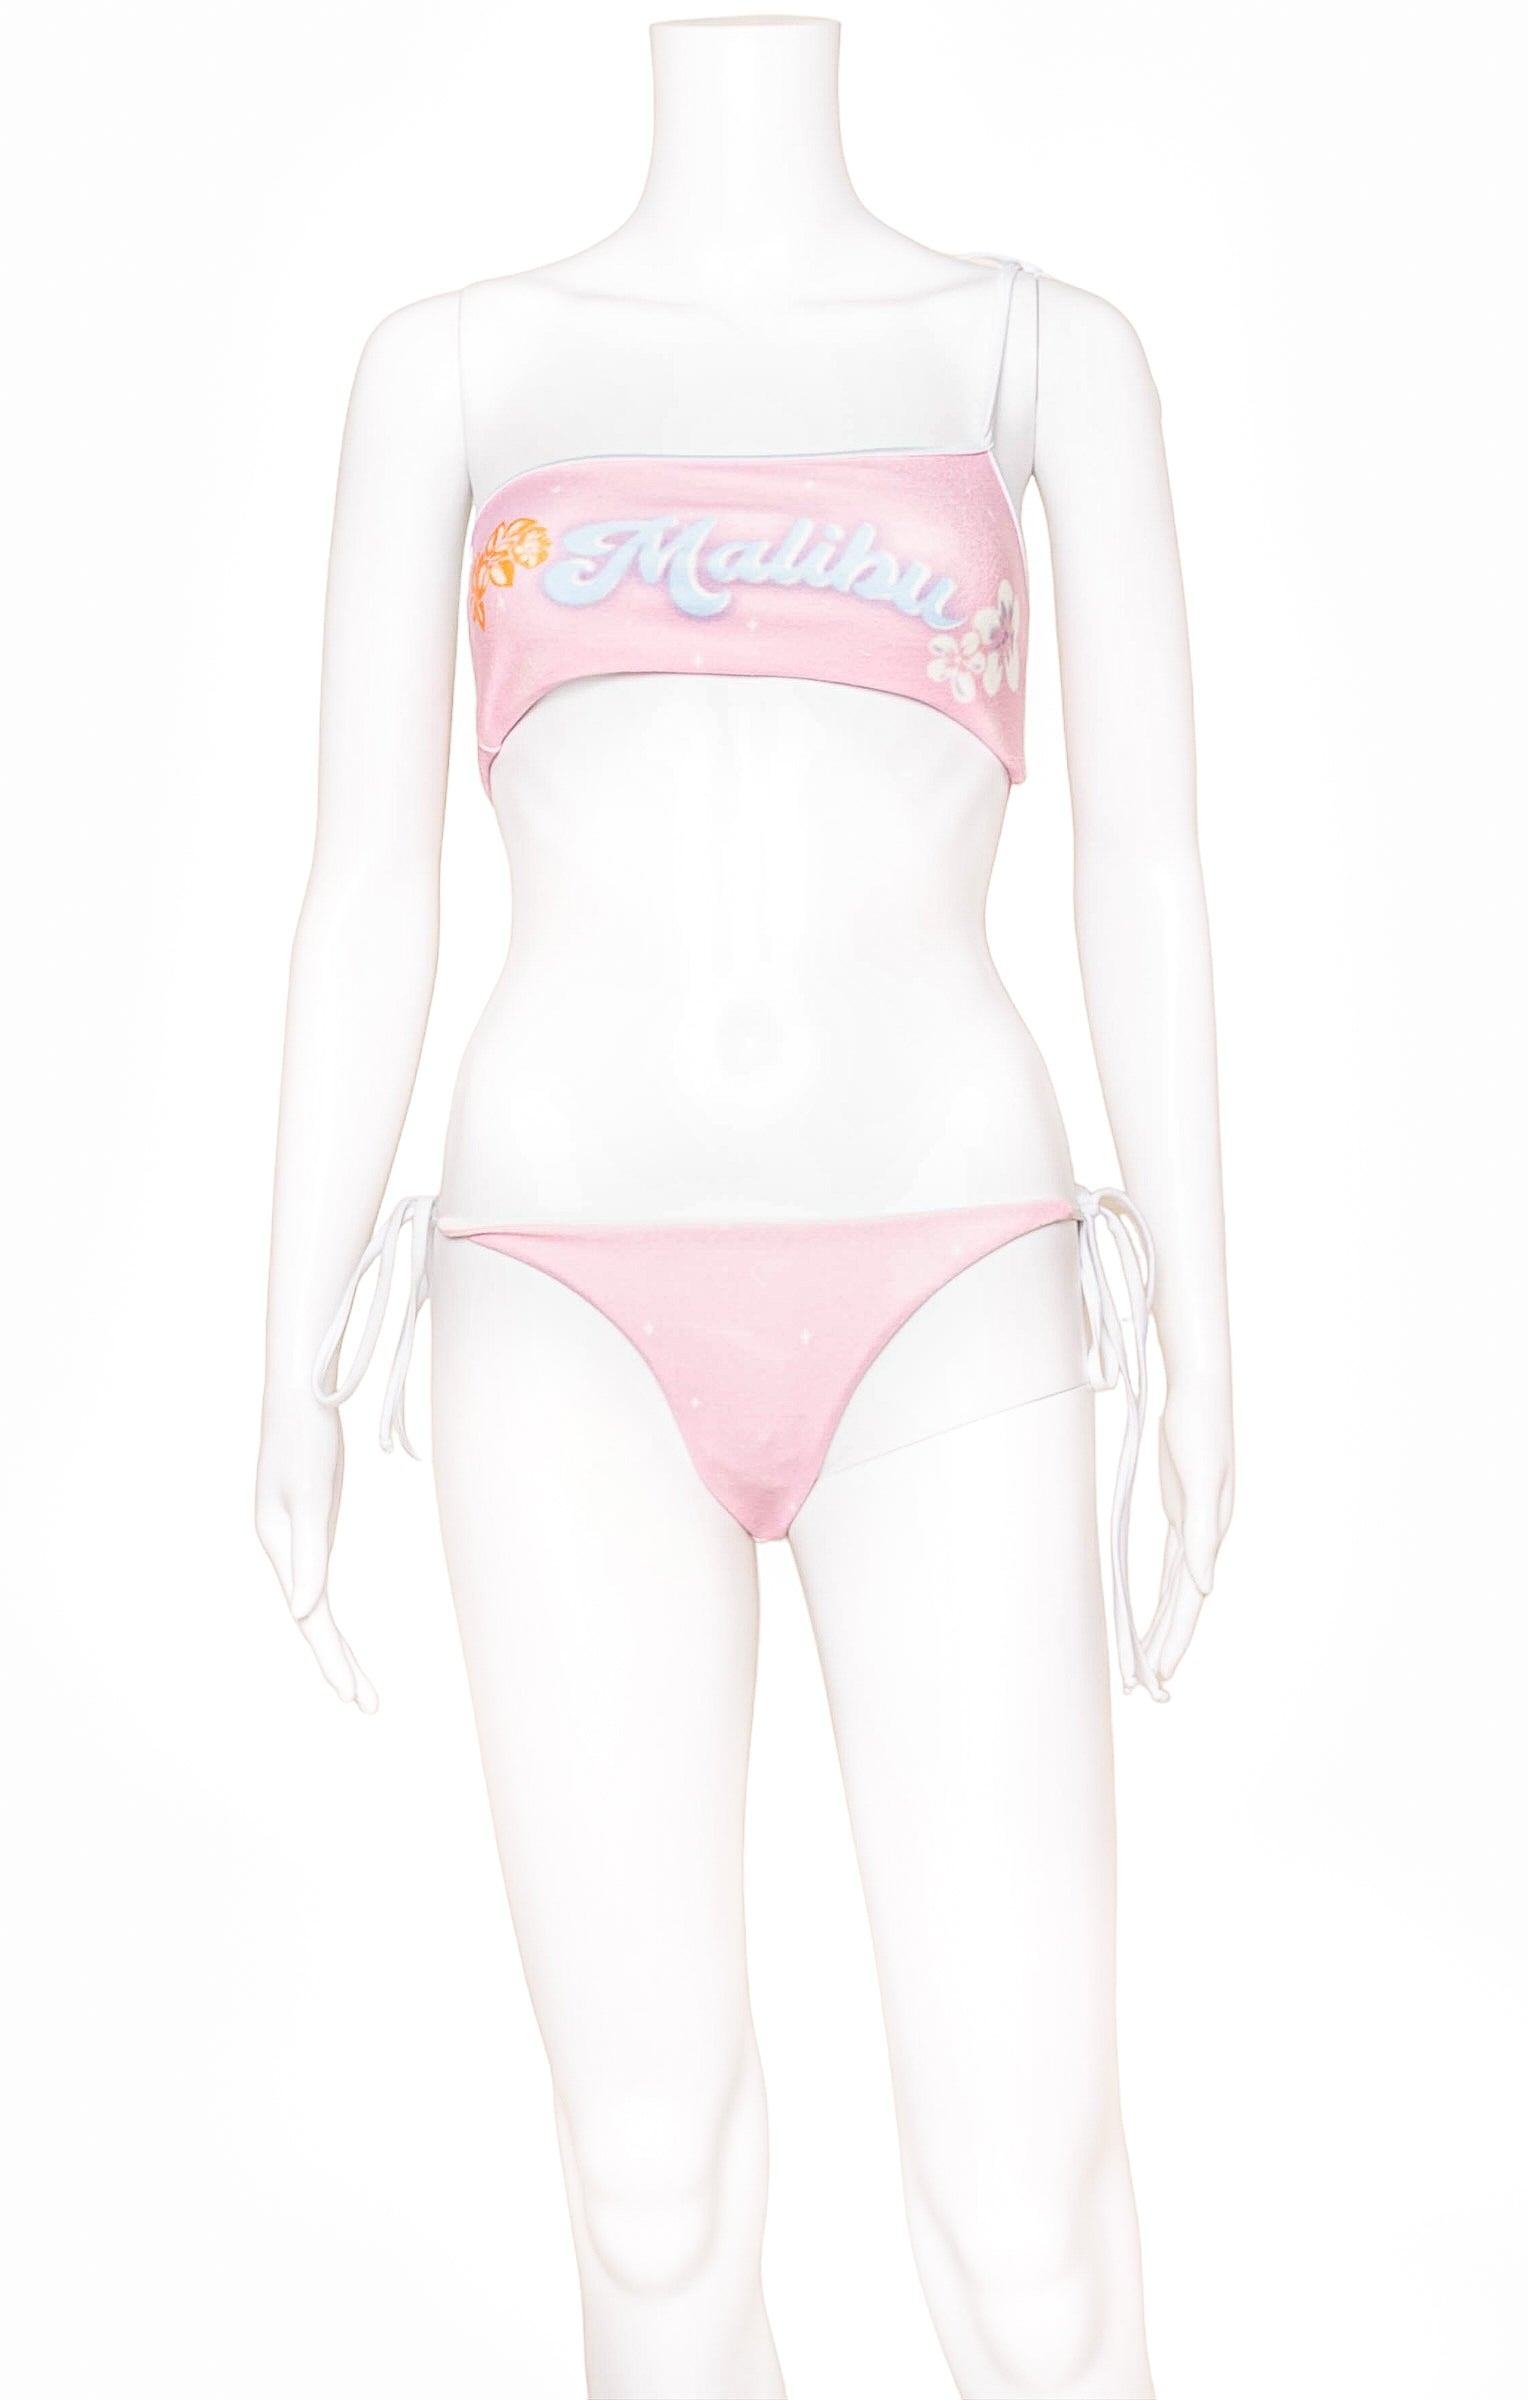 FRANKIES BIKINIS (NEW) with tags Bikini Set Size: Top - S, Bottoms - M